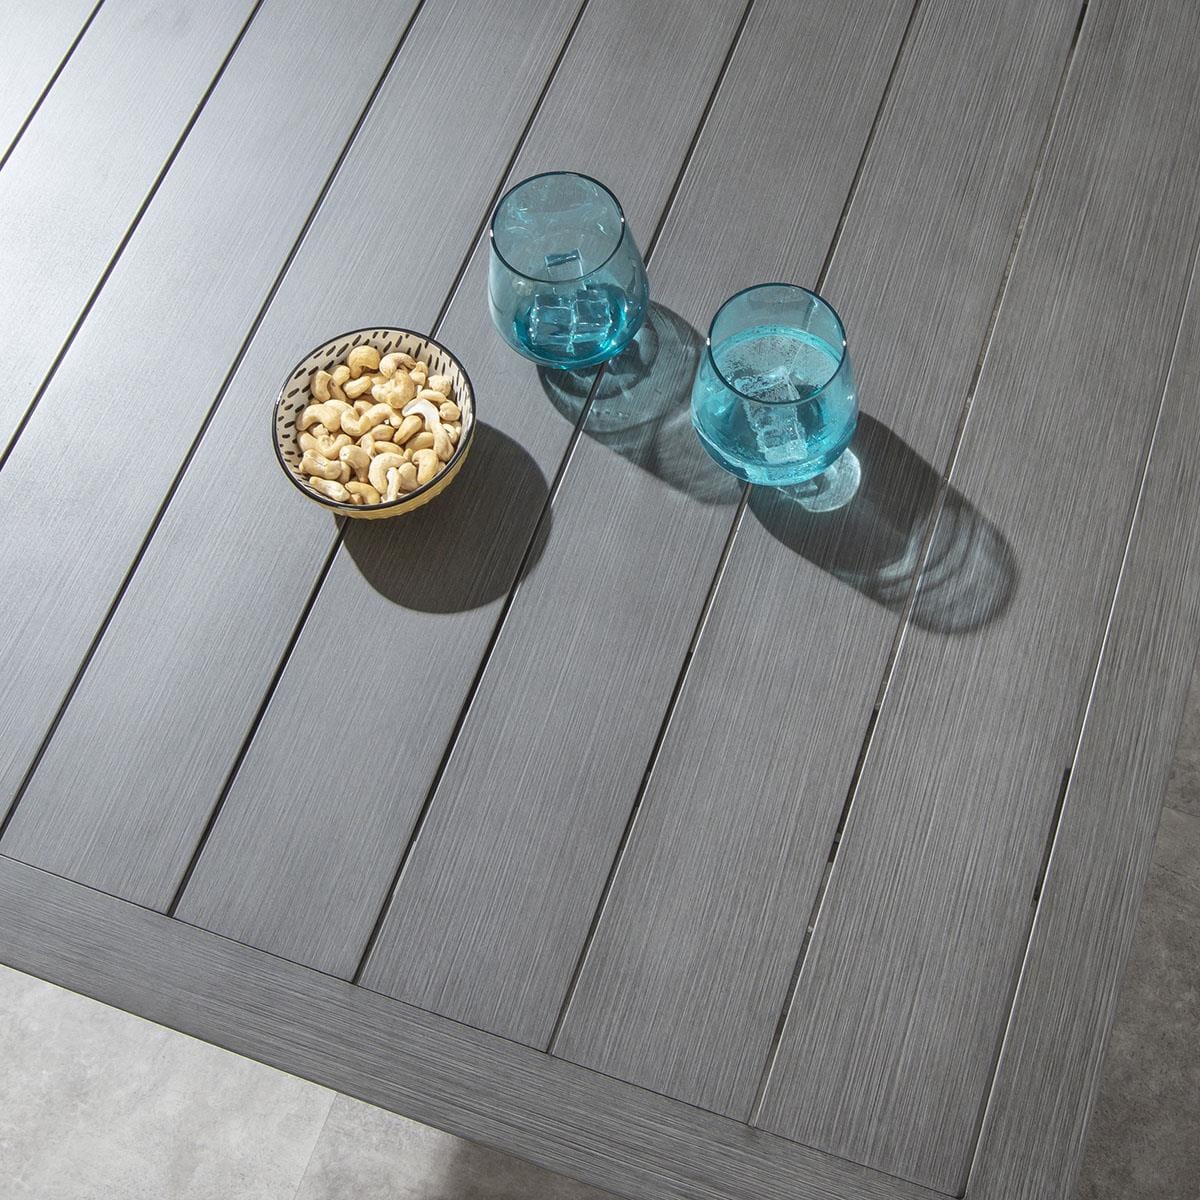 Quatropi Cole 6 Seater Garden Dining Set Blue & Grey Wood Effect Aluminium